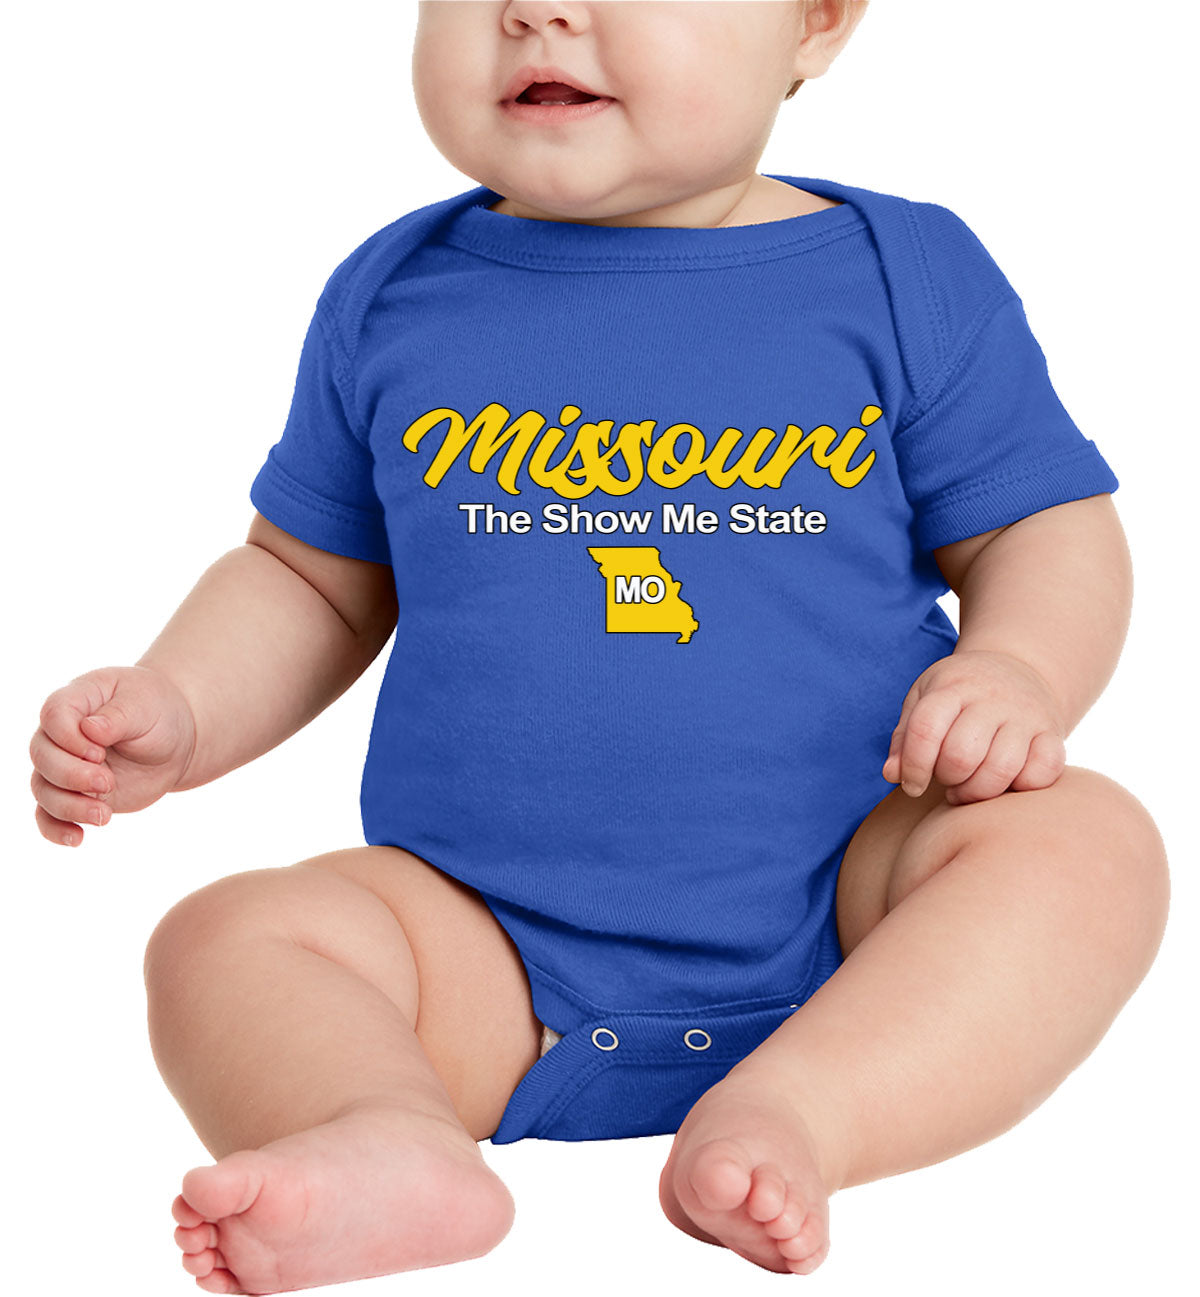 Missouri The Show Me State Baby Onesie